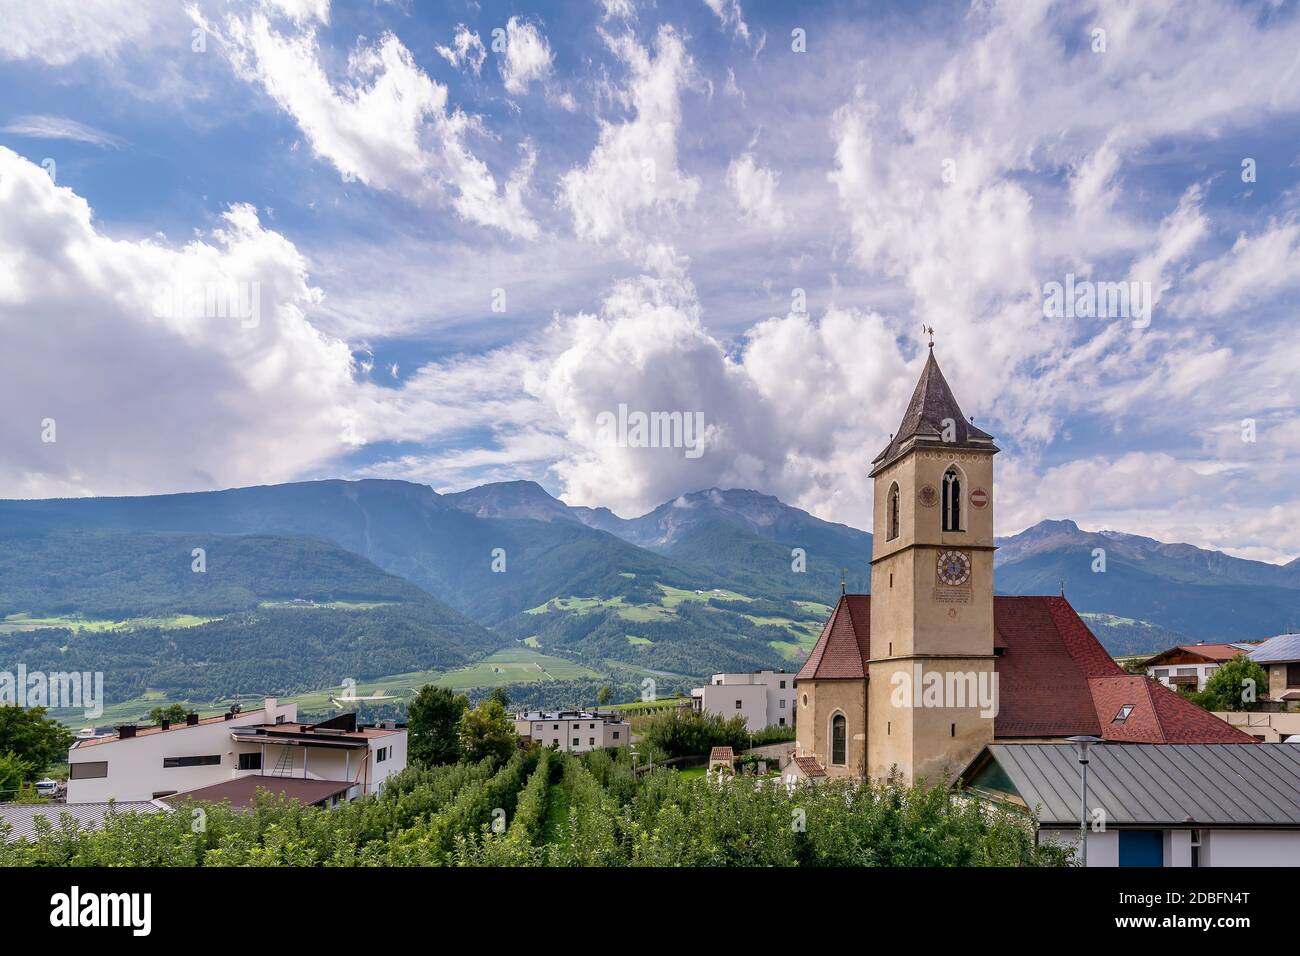 The parish church Pfarrkirche St. Johannes der Täufer in Corzes, South Tyrol, Italy, against a dramatic sky Stock Photo